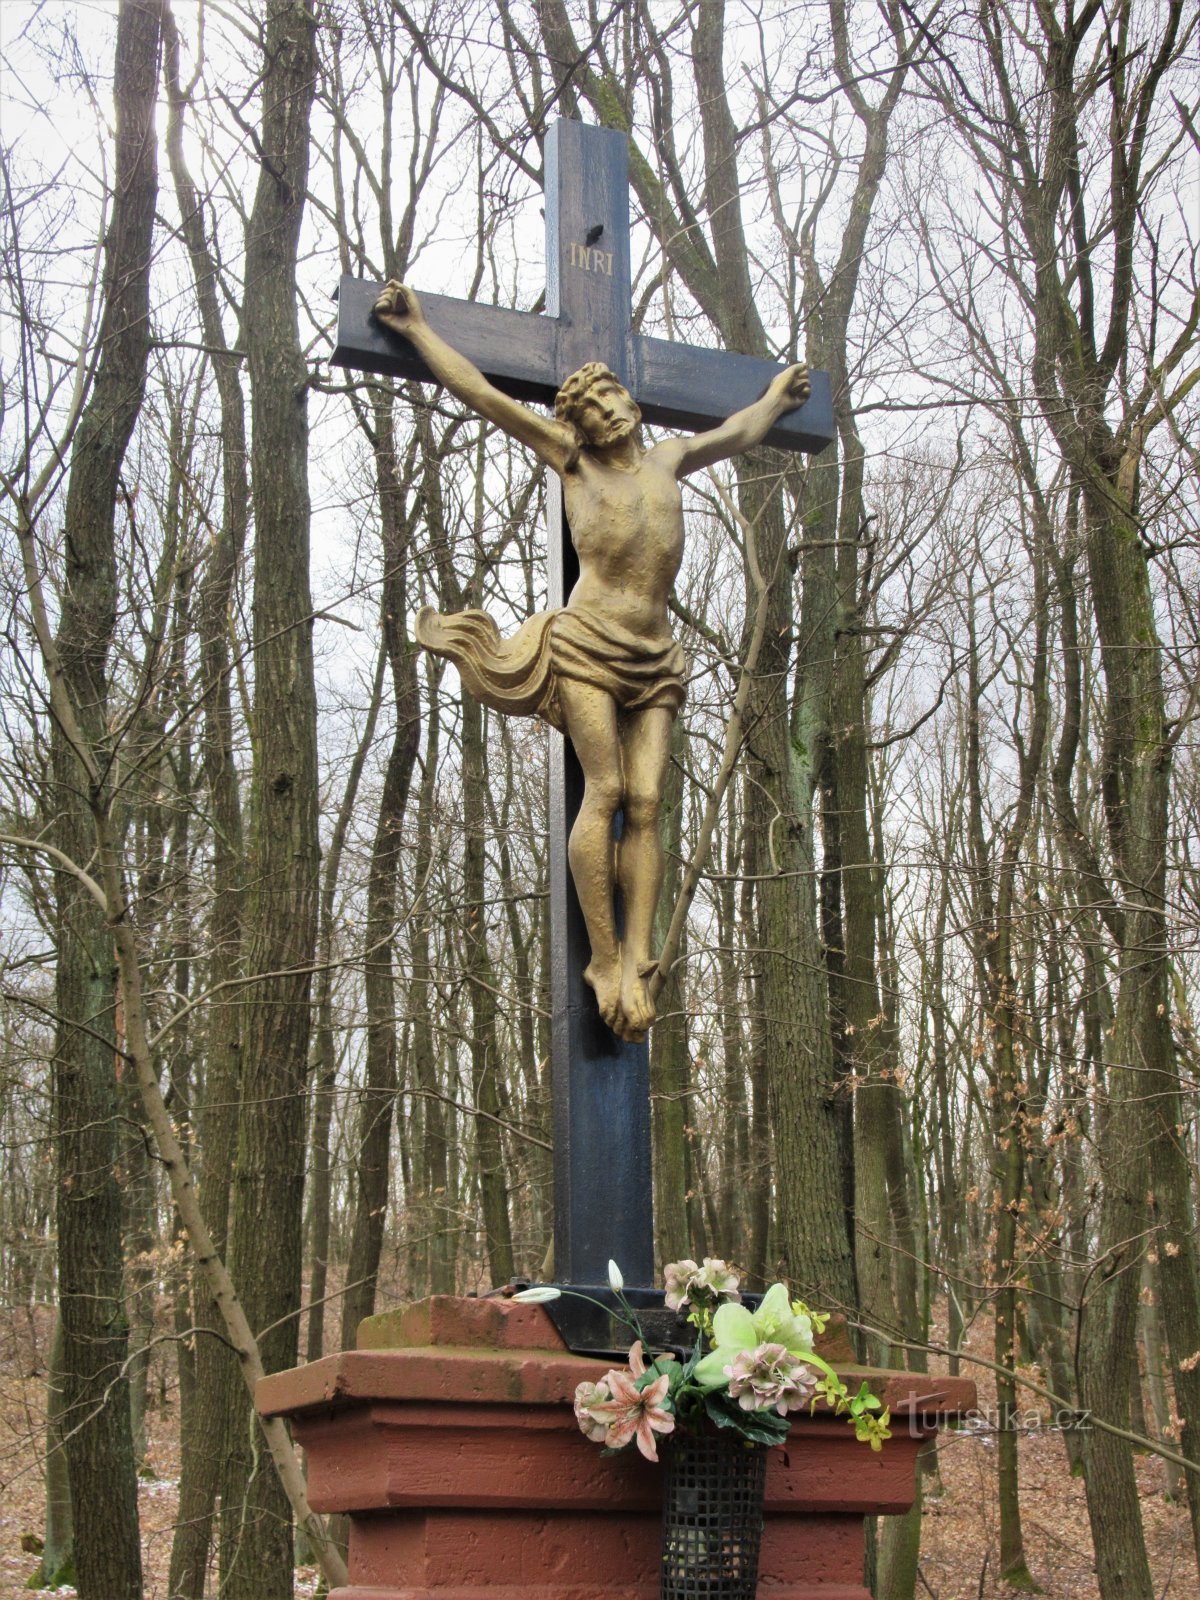 Brno-Kohoutovice - かつての薪小屋にある鋳鉄製の十字架